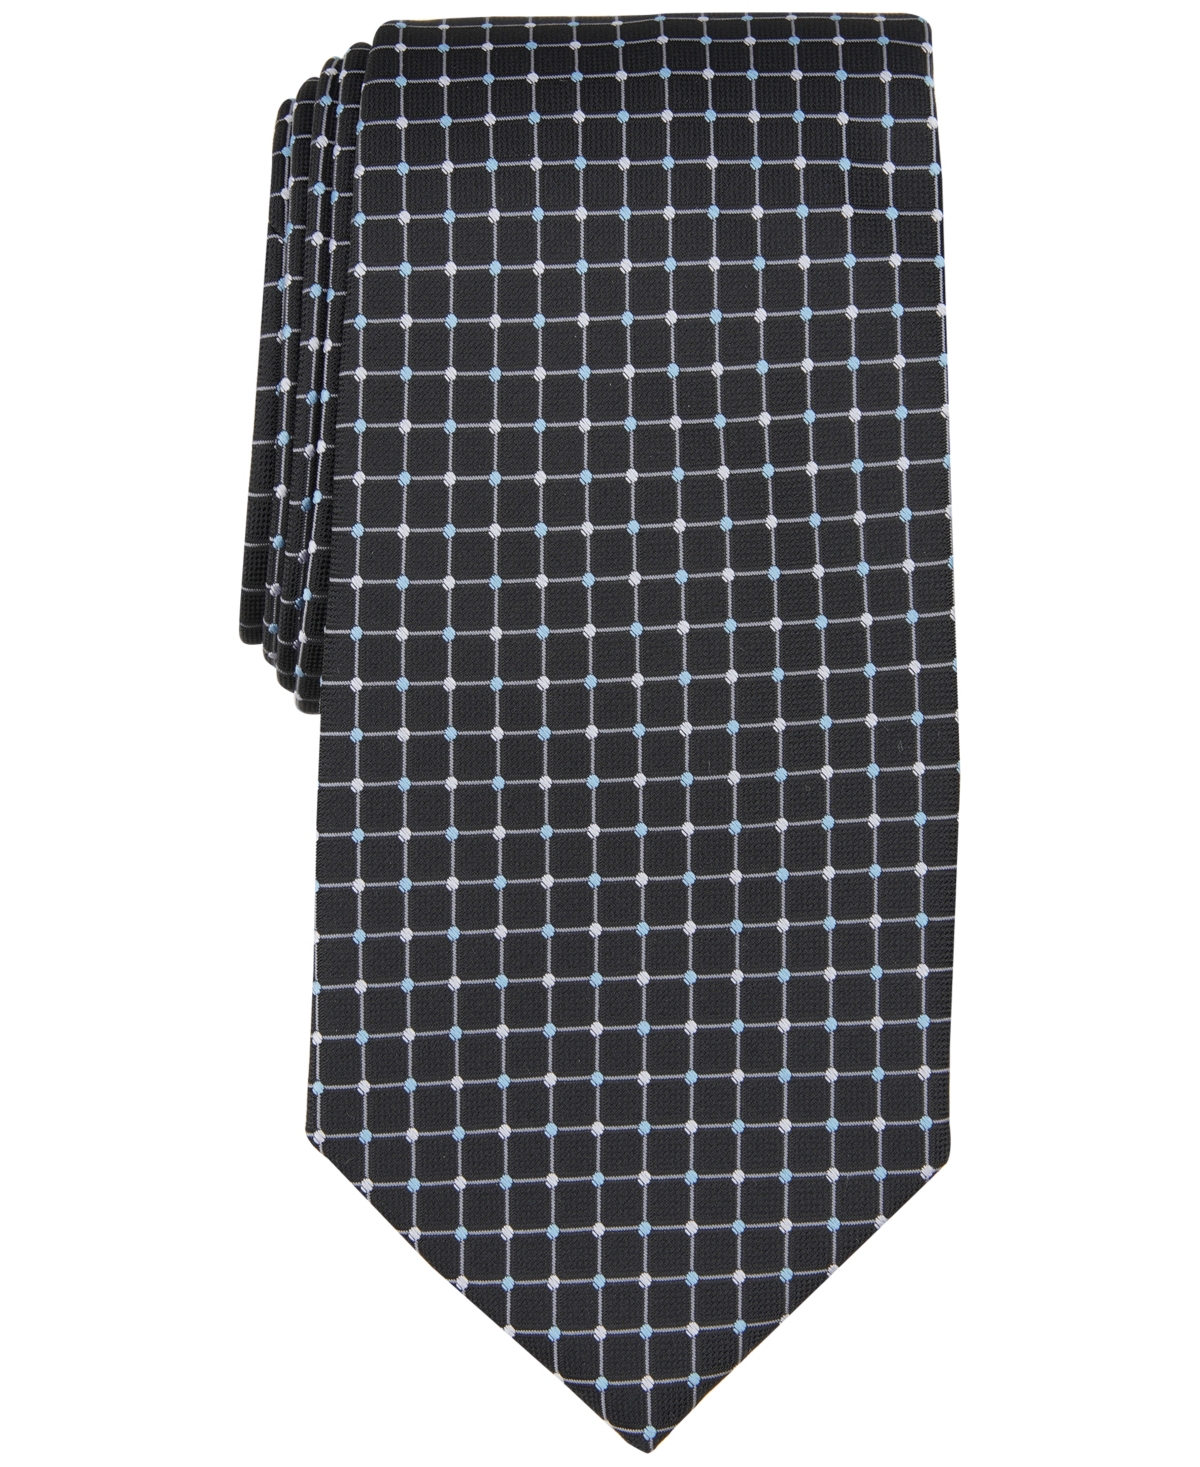 Men's White Grid Tie, Created for Macy's - Black